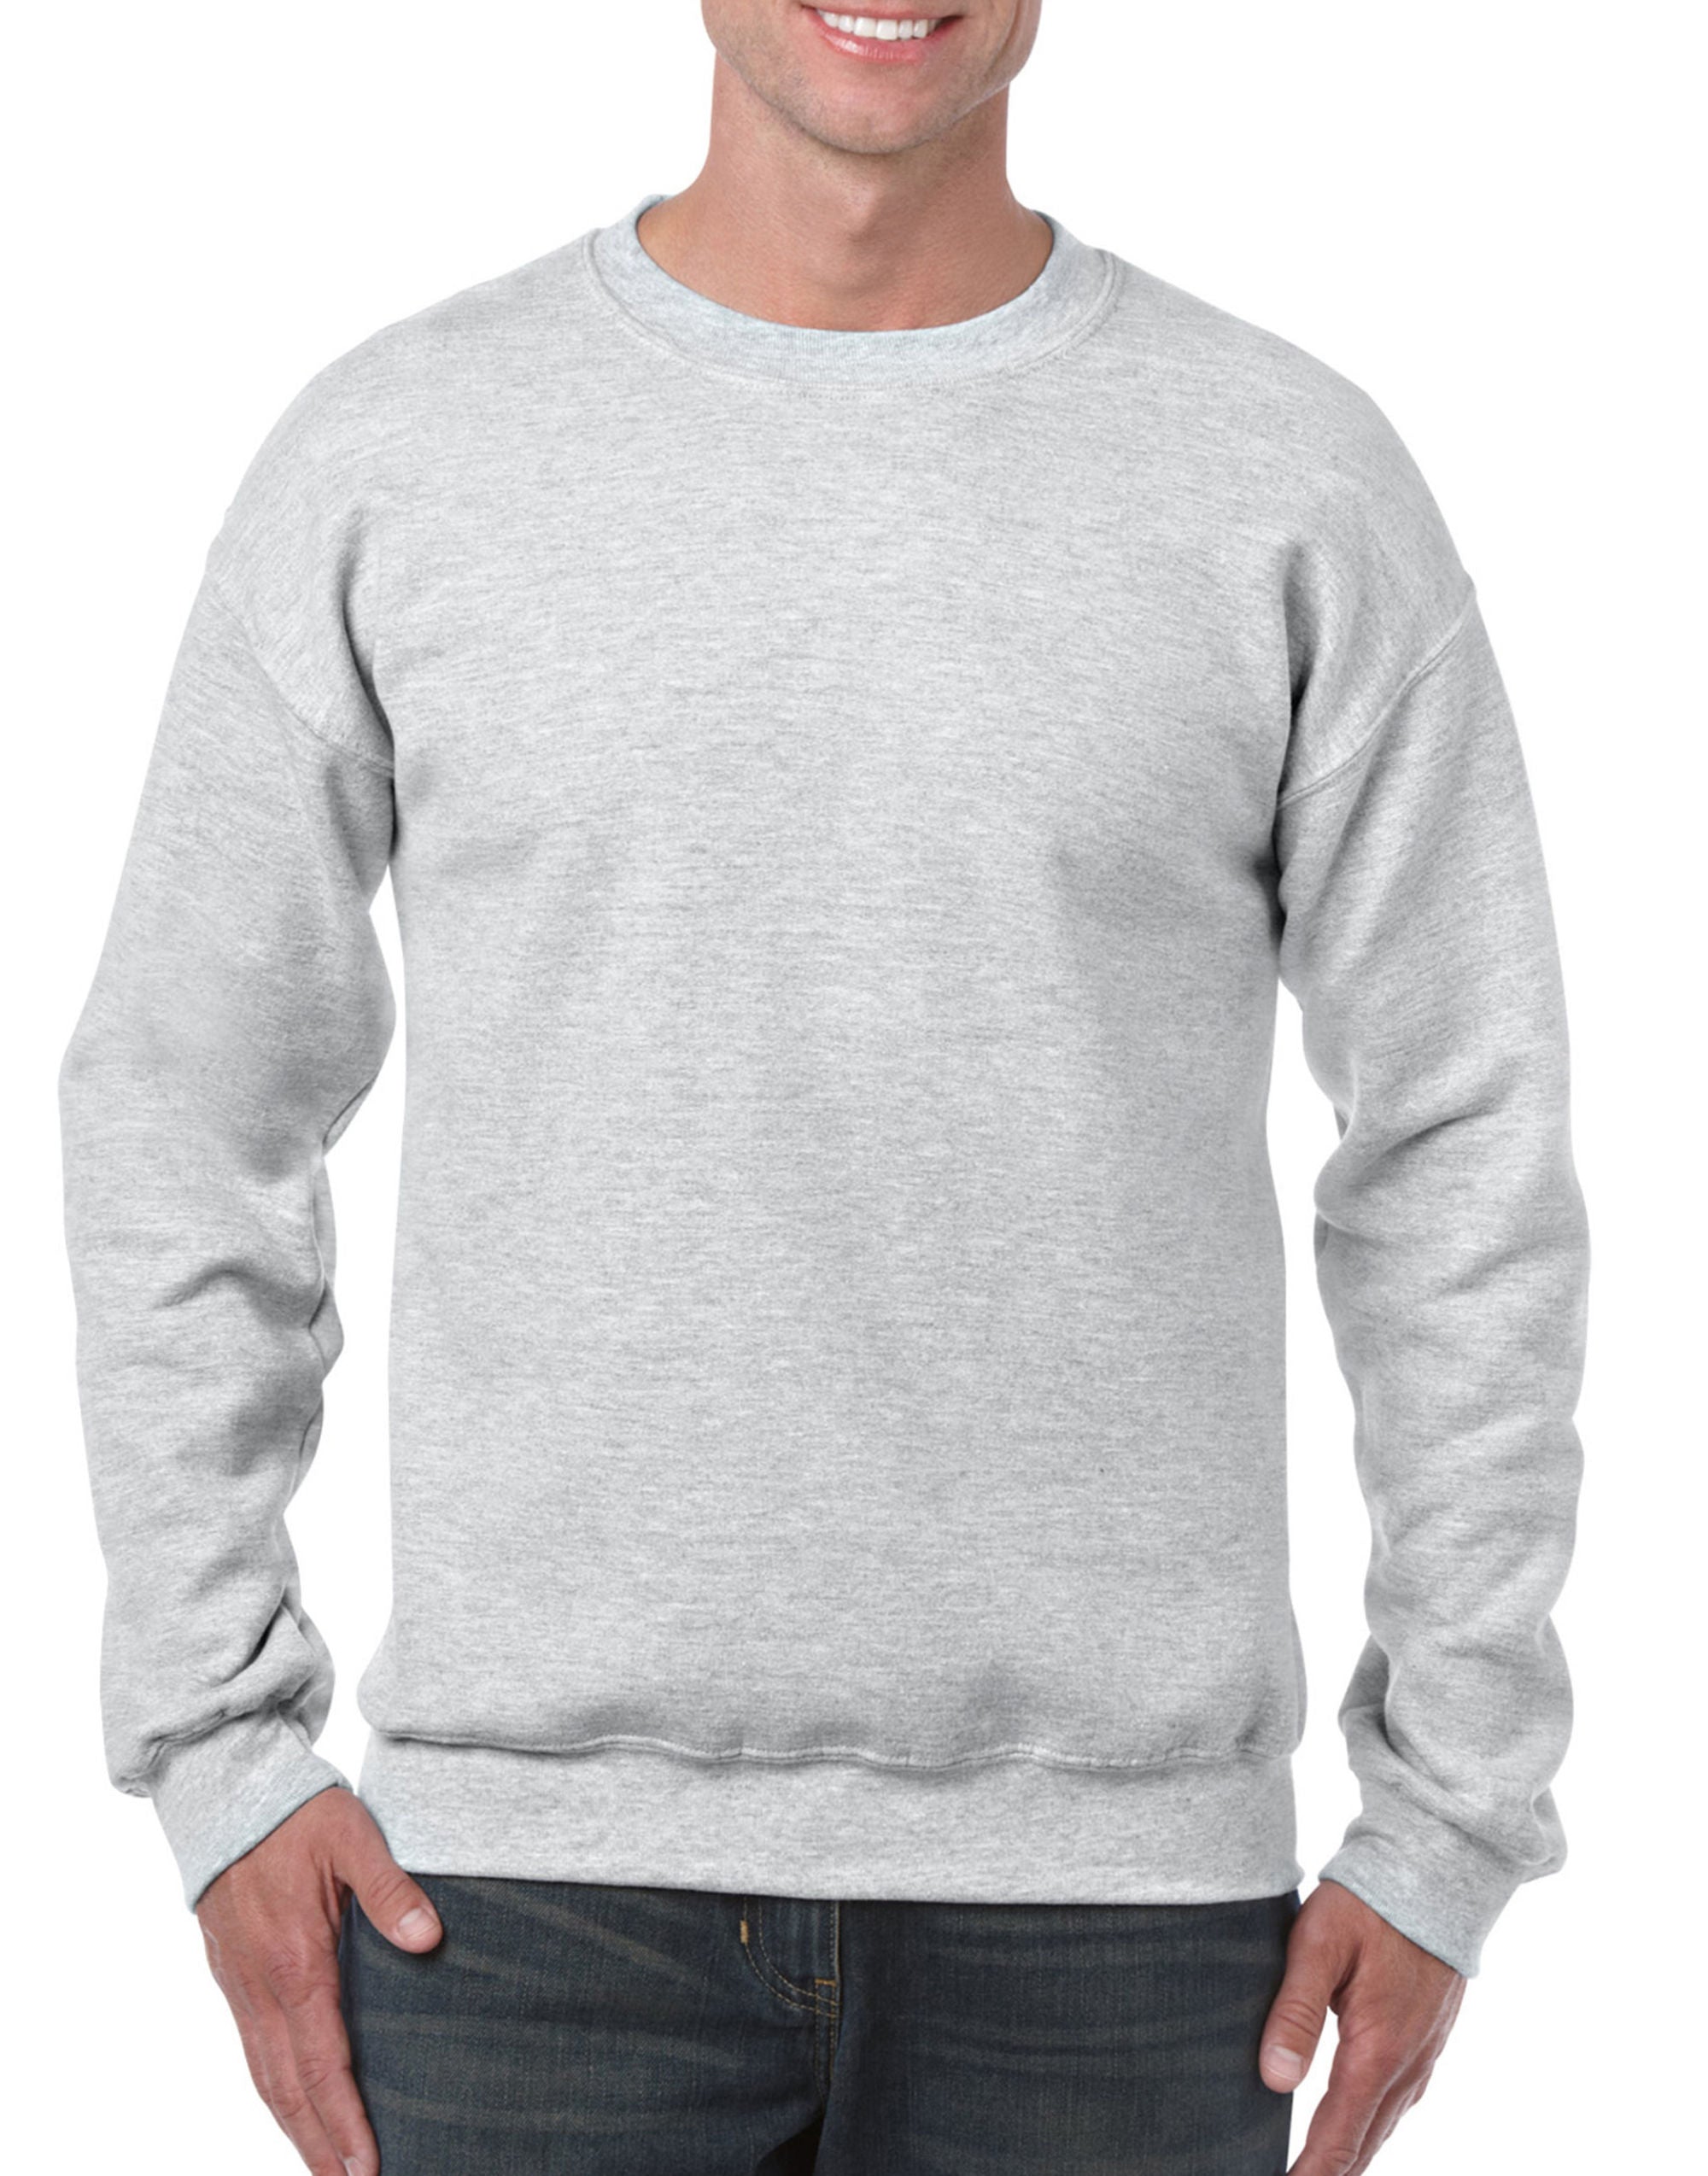 5 x Sweatshirts with Embroidered LOGO